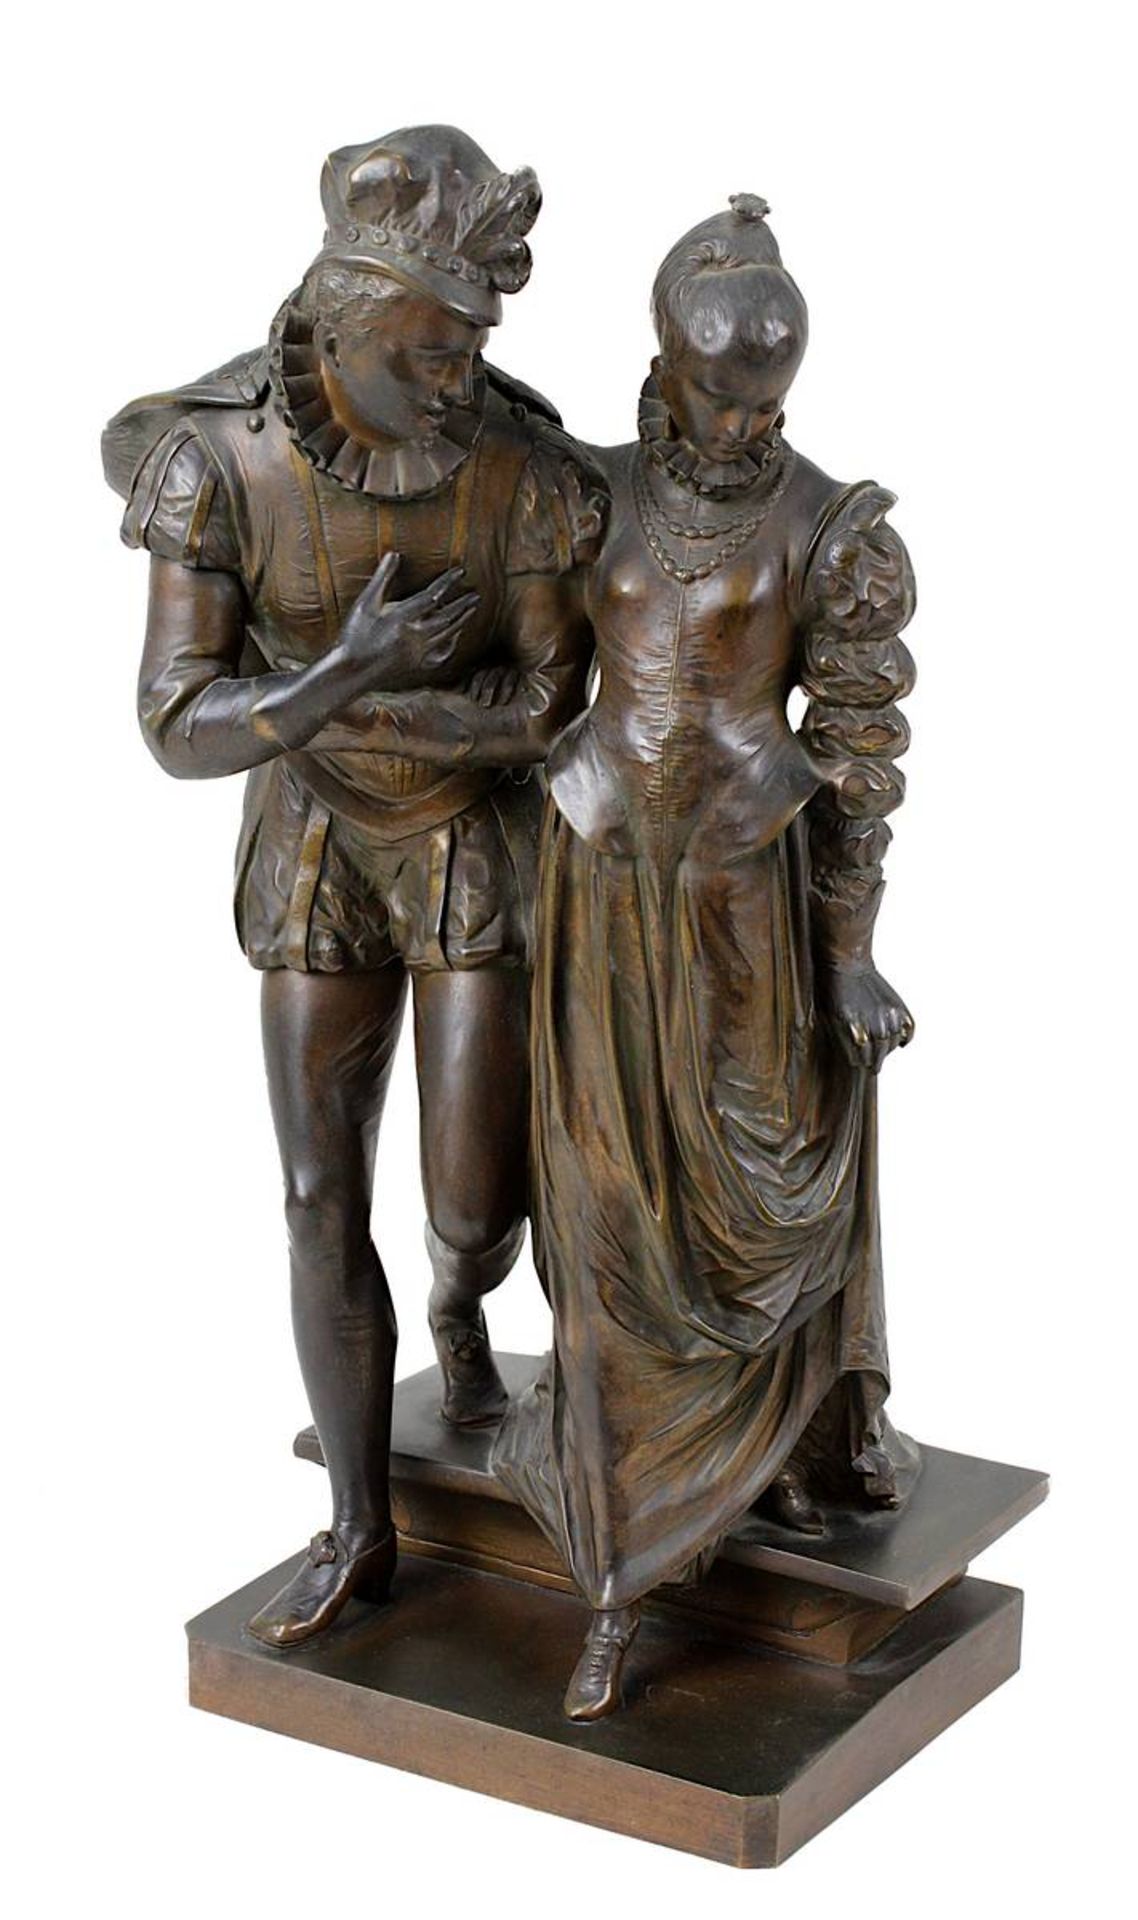 Skulpteur, Frankreich Ende 19. / Anfang 20. Jh., höfisches Paar in der Mode des ausgehenden 16. Jh.,